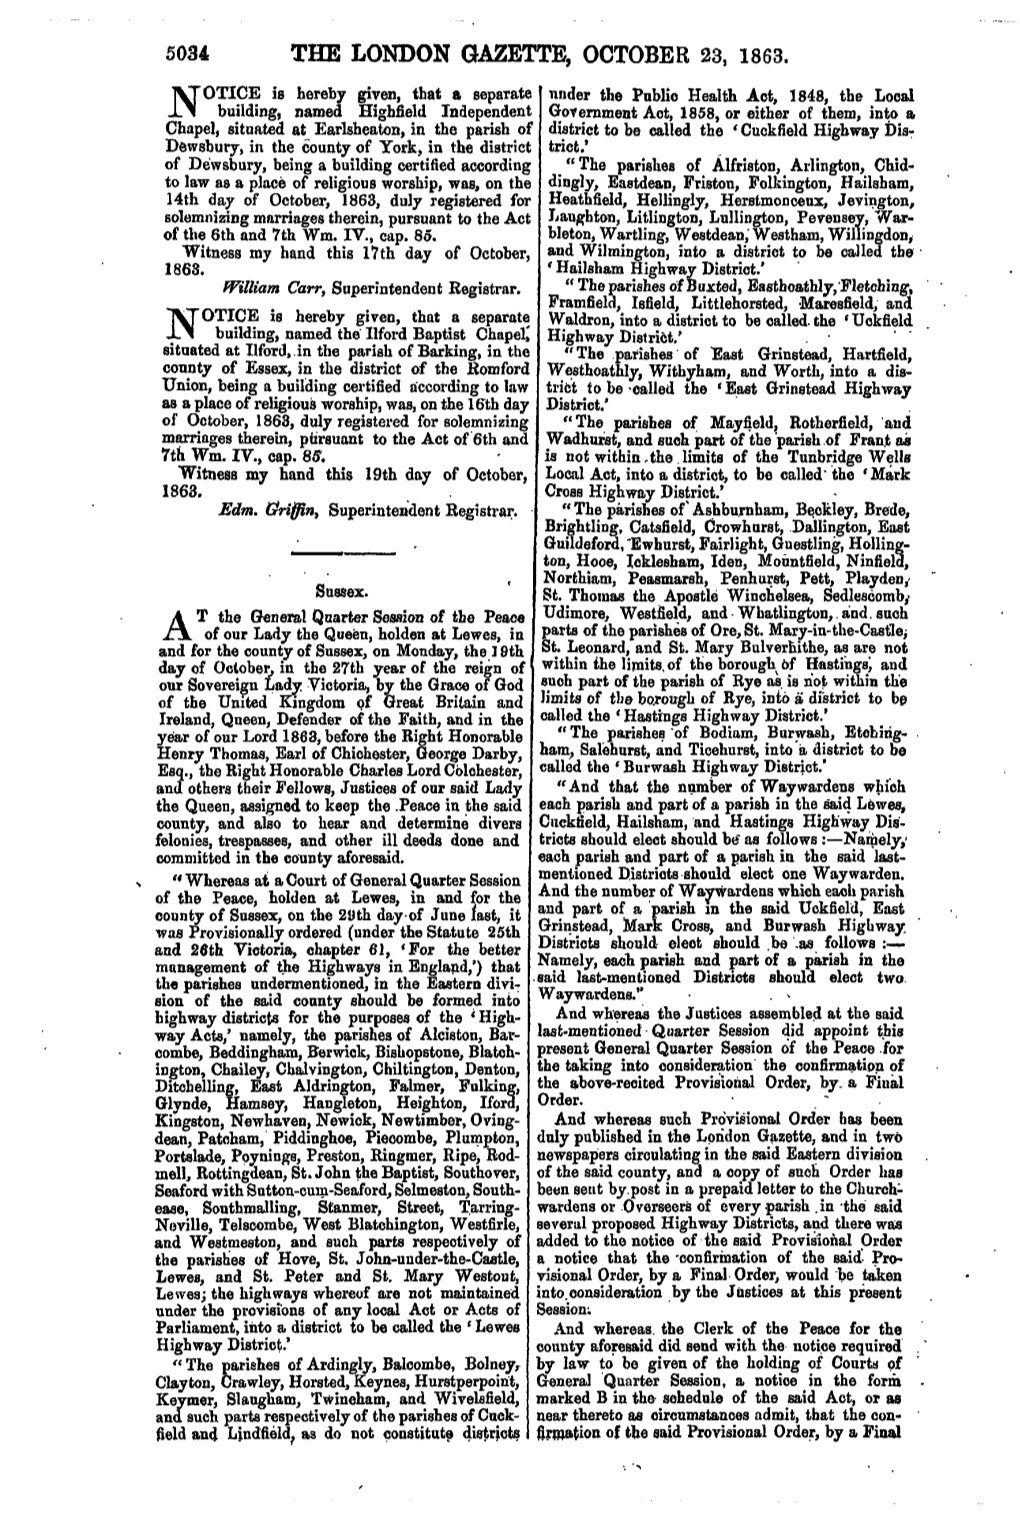 The London Gazette, October 23, 1863